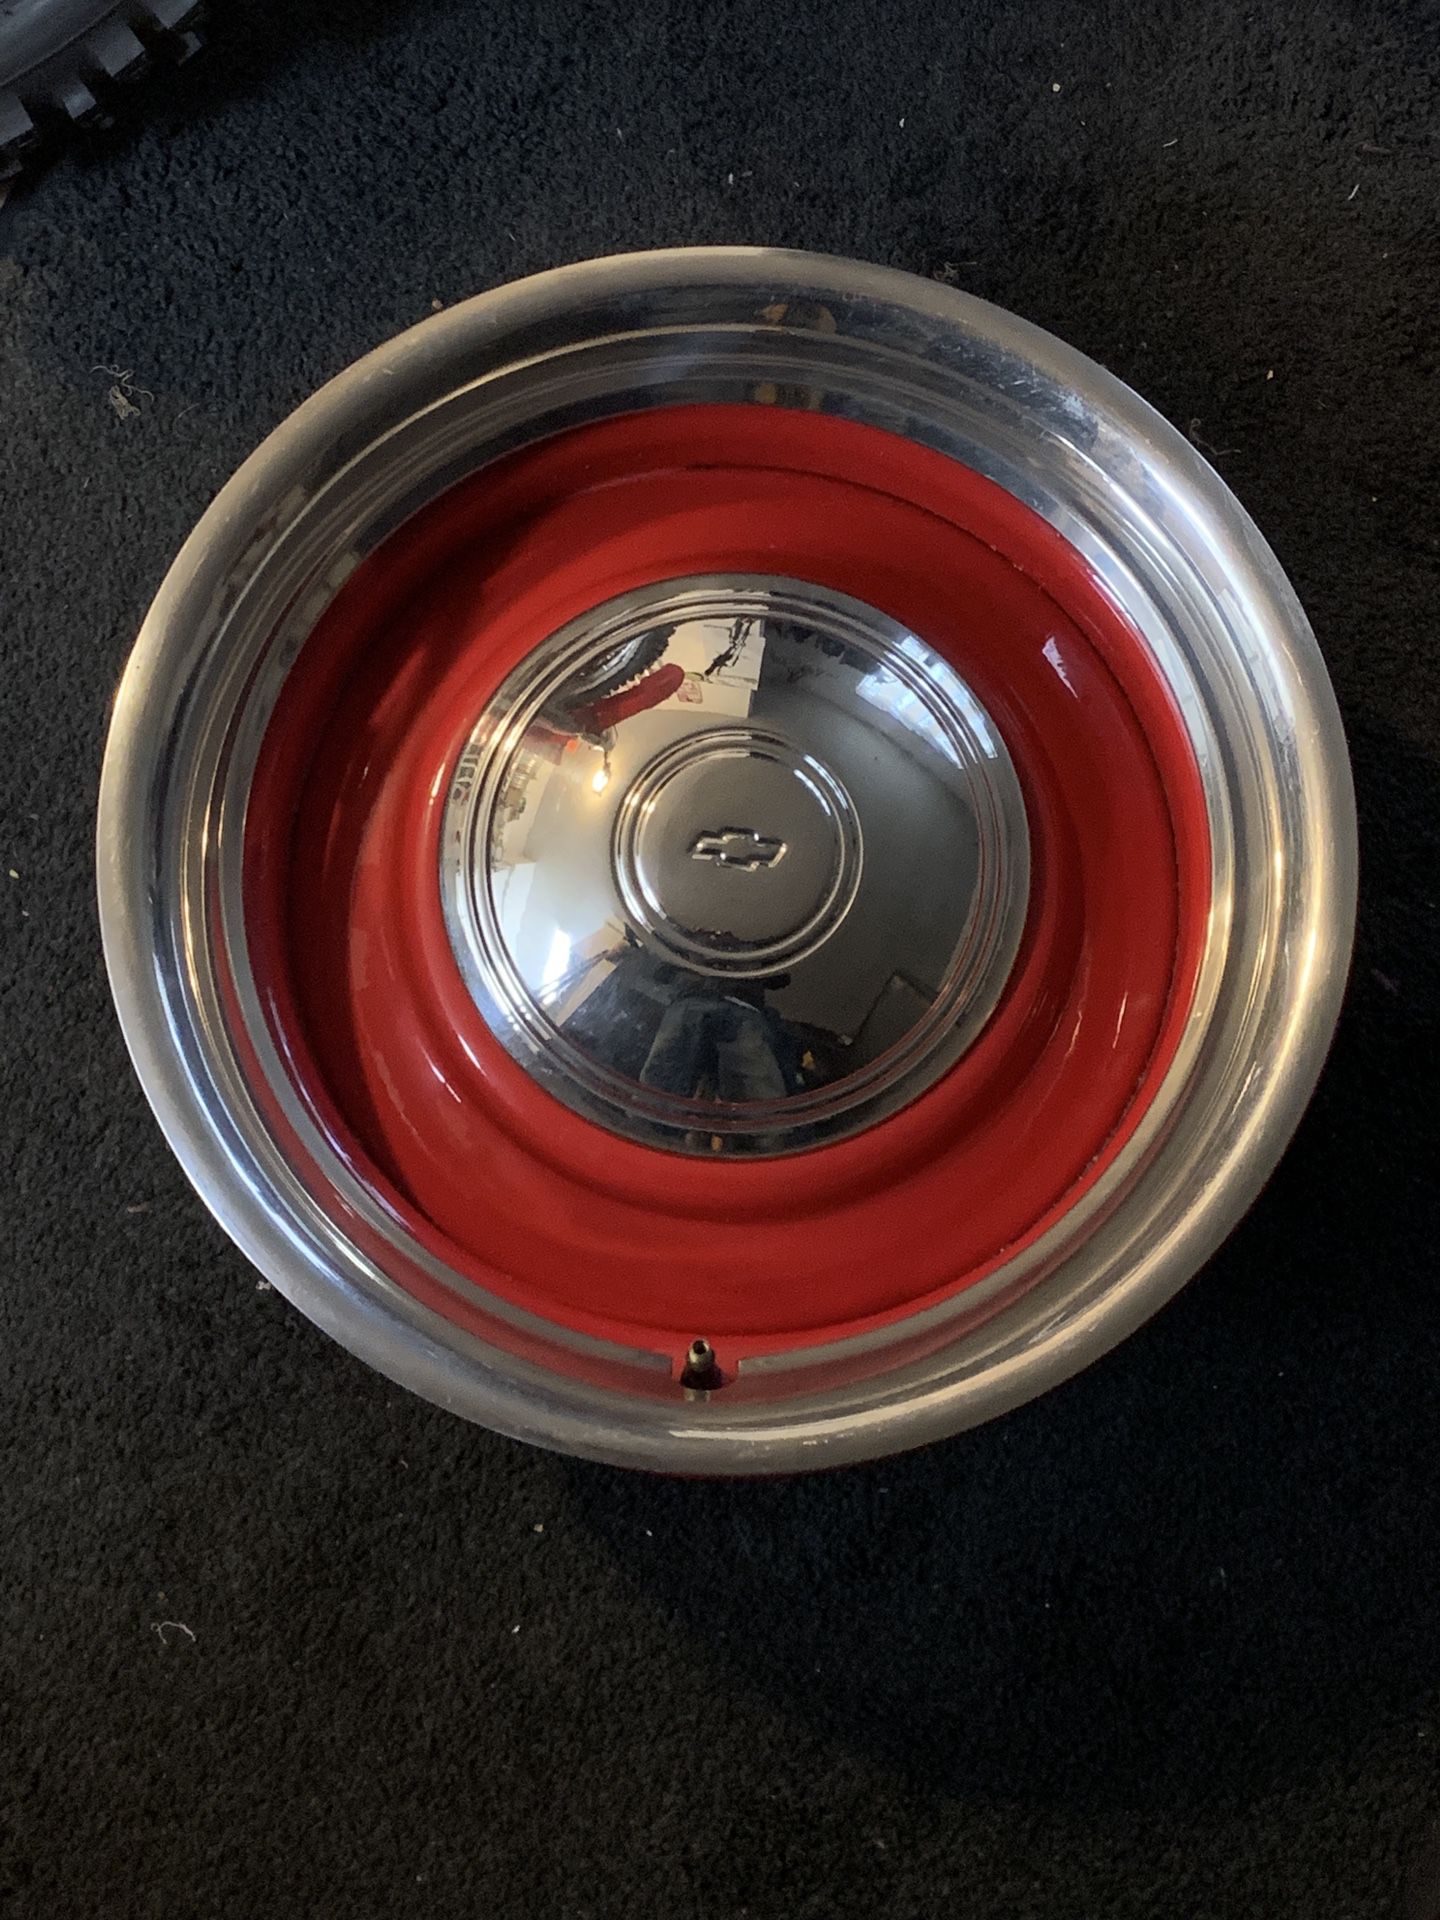 steelies / rally wheels 16 x 7 red powder coated